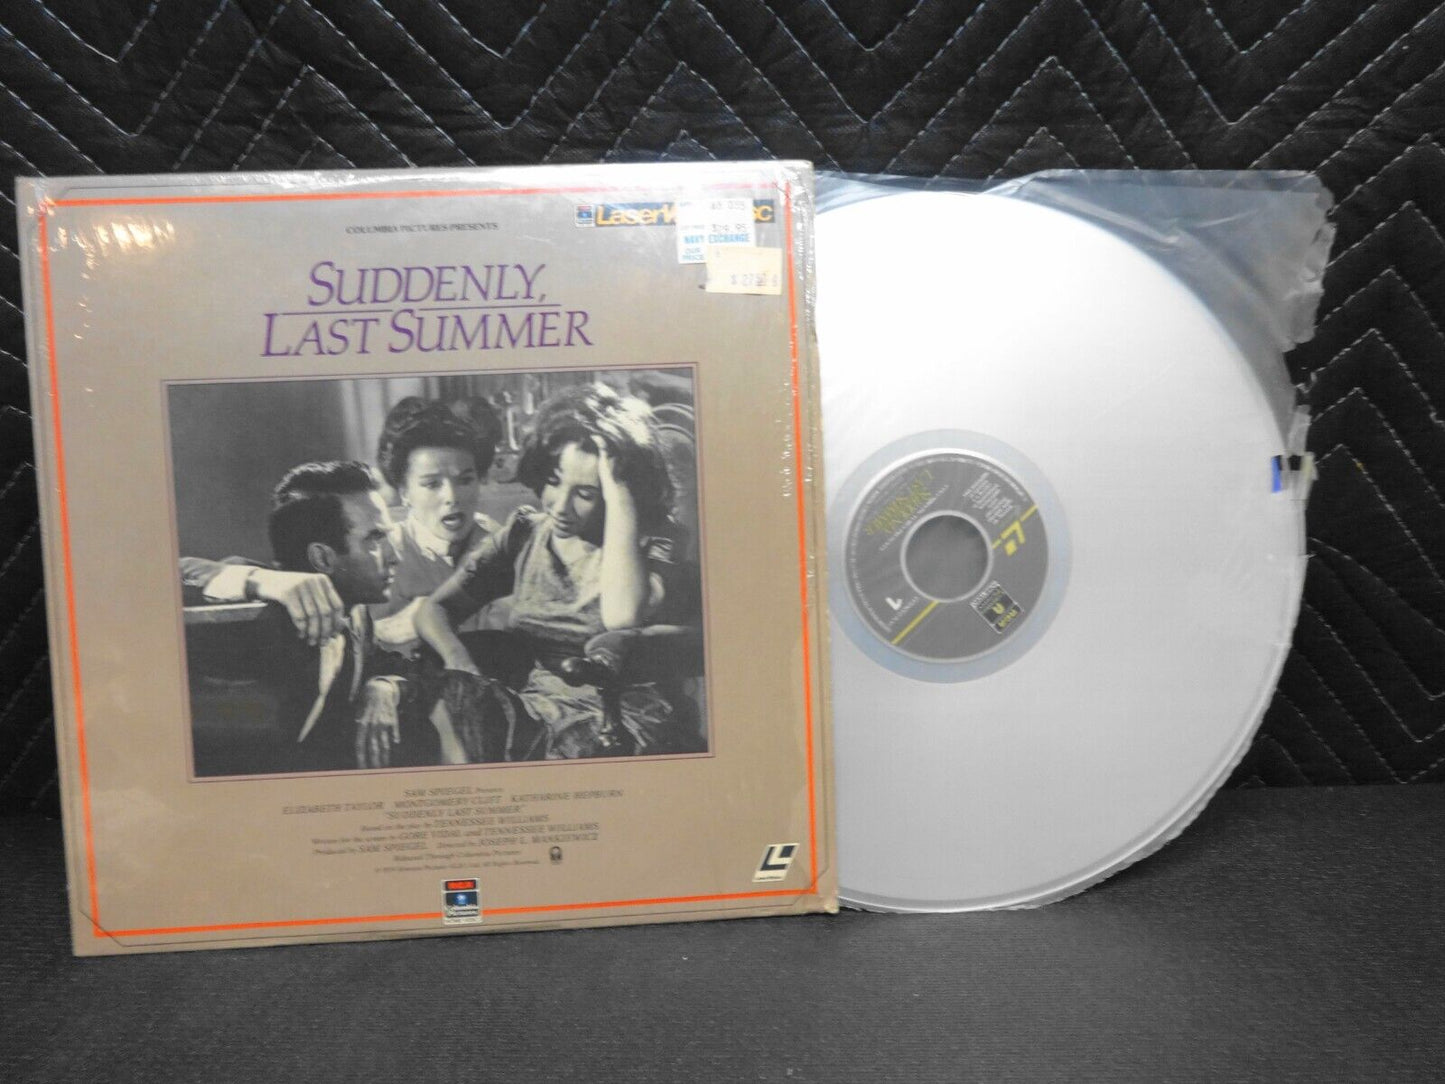 SUDDENLY, LAST SUMMER Laserdisc - ELIZABETH TAYLOR